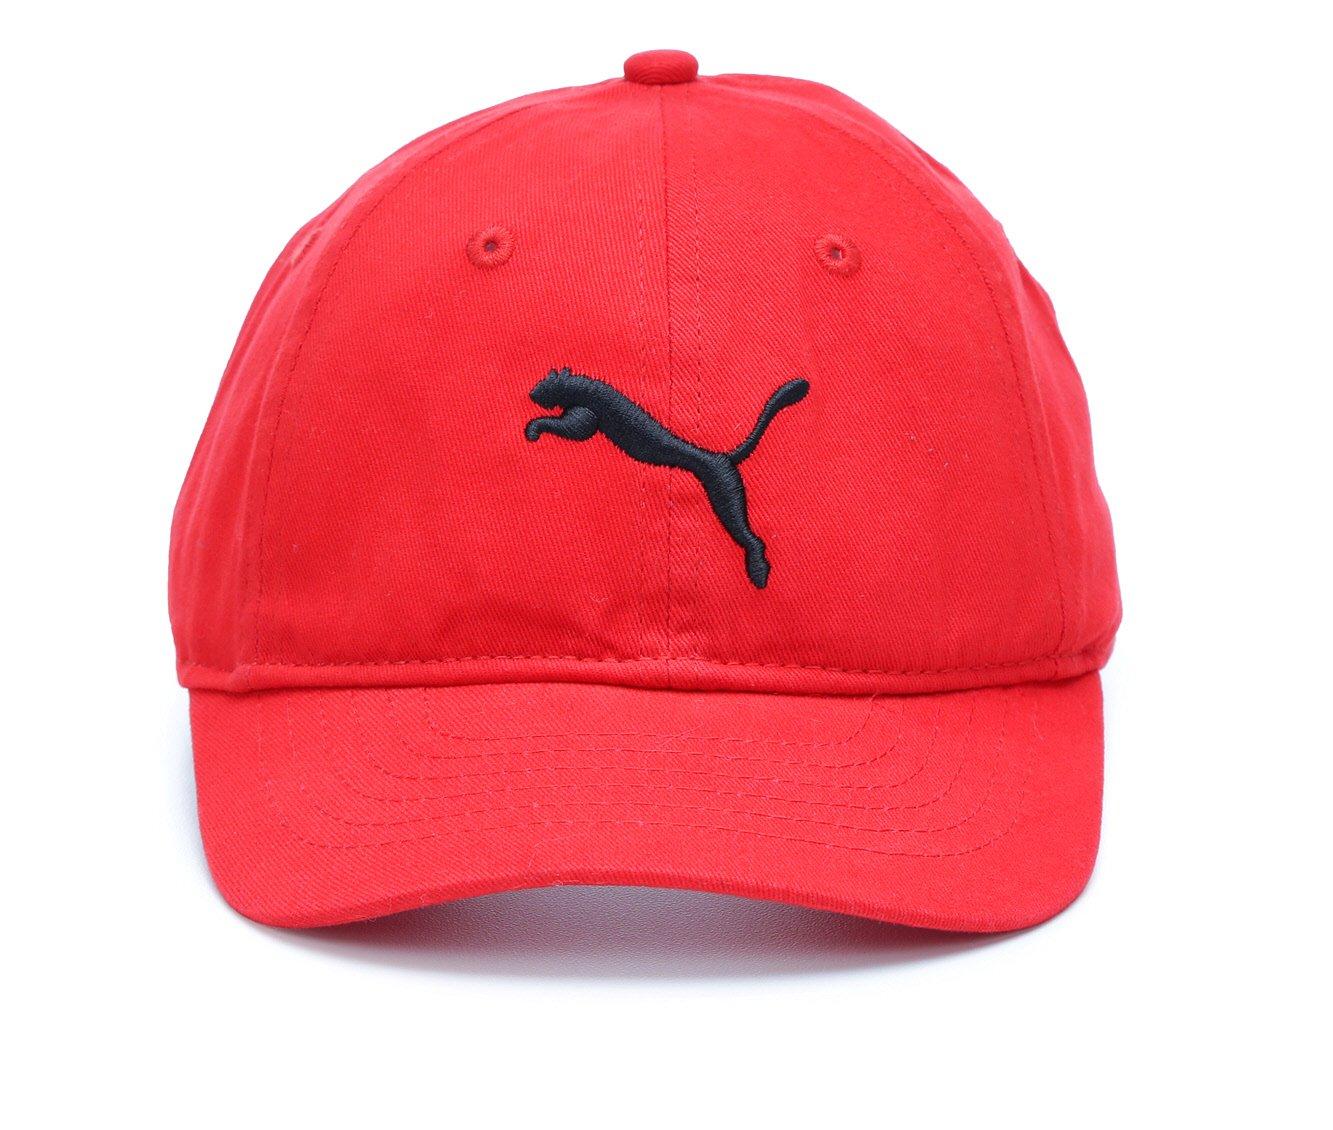 Puma Youth Adjustable Woven Cap